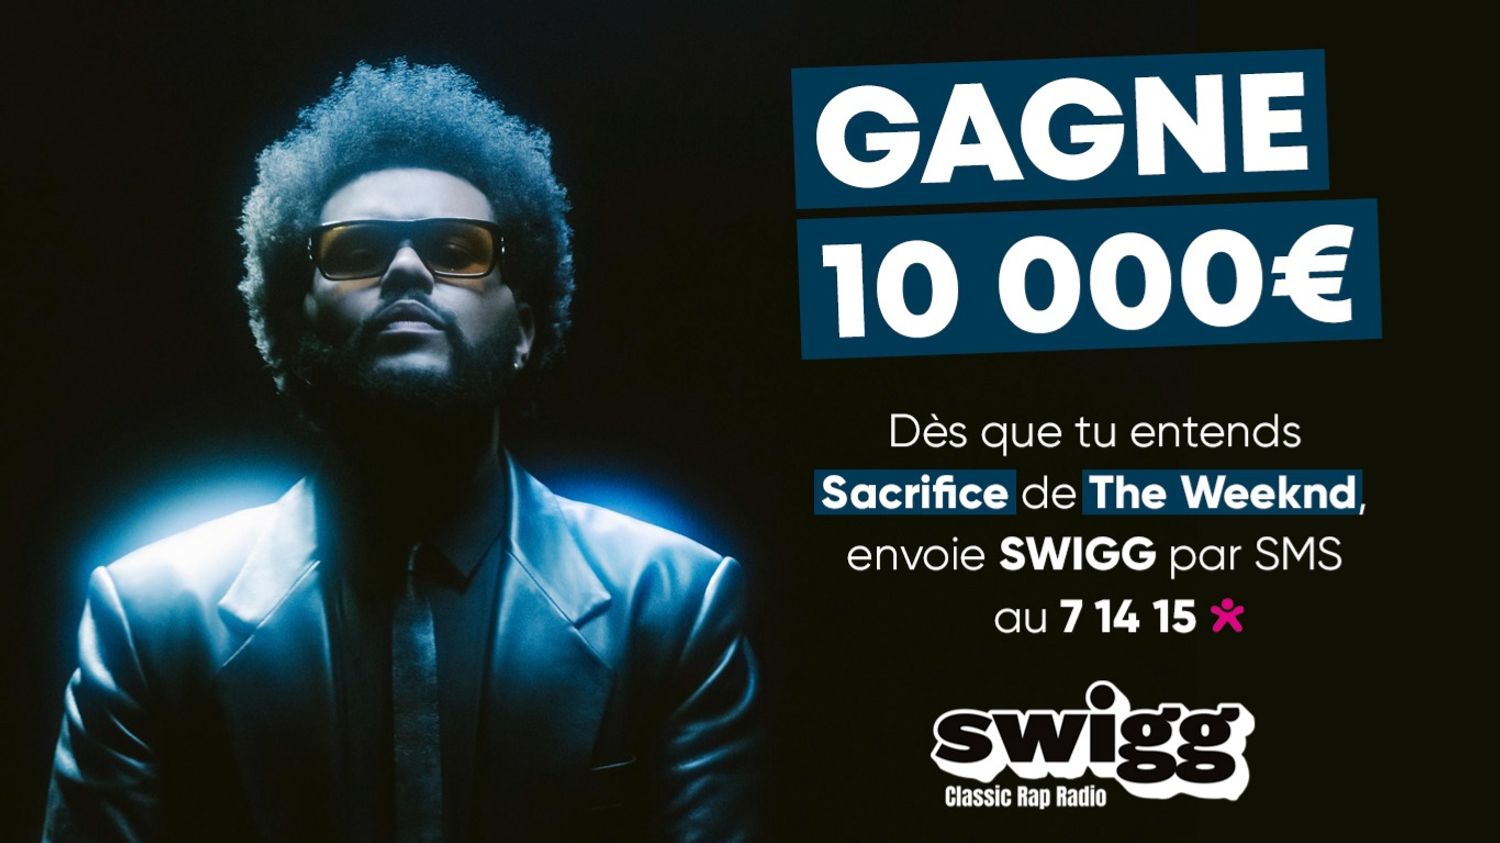 Gagne 10 000€ cash sur Swigg